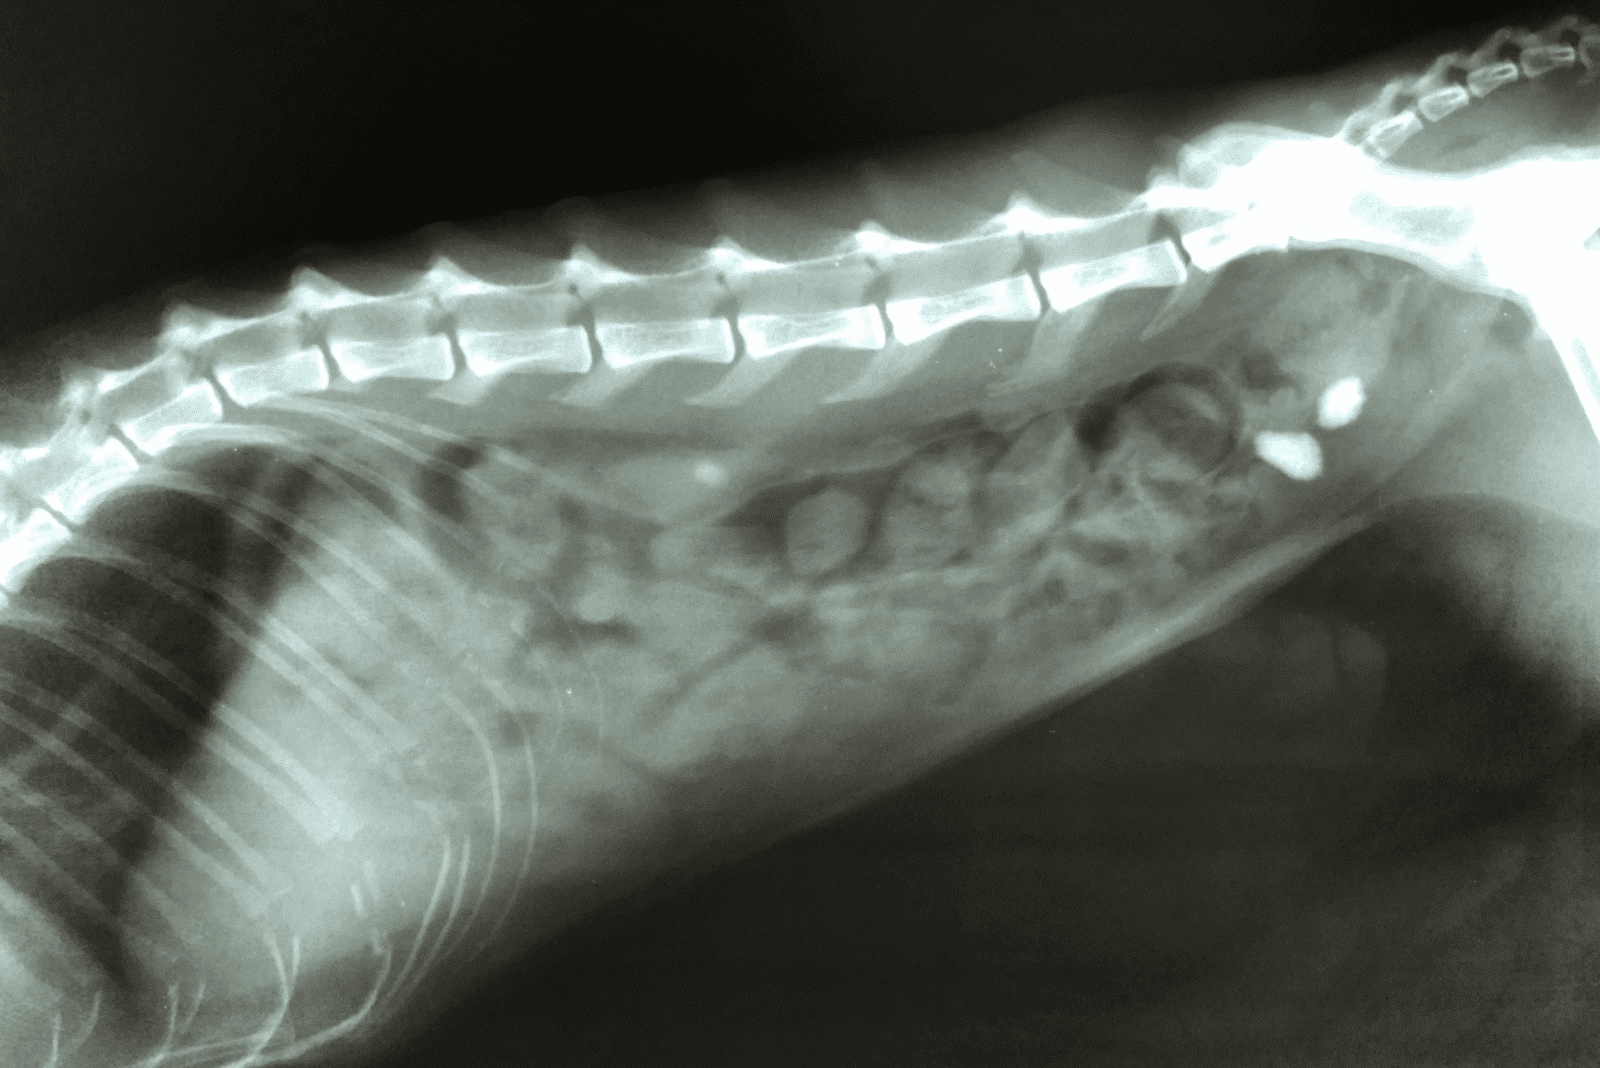 x ray film stone in urine bladder of animal